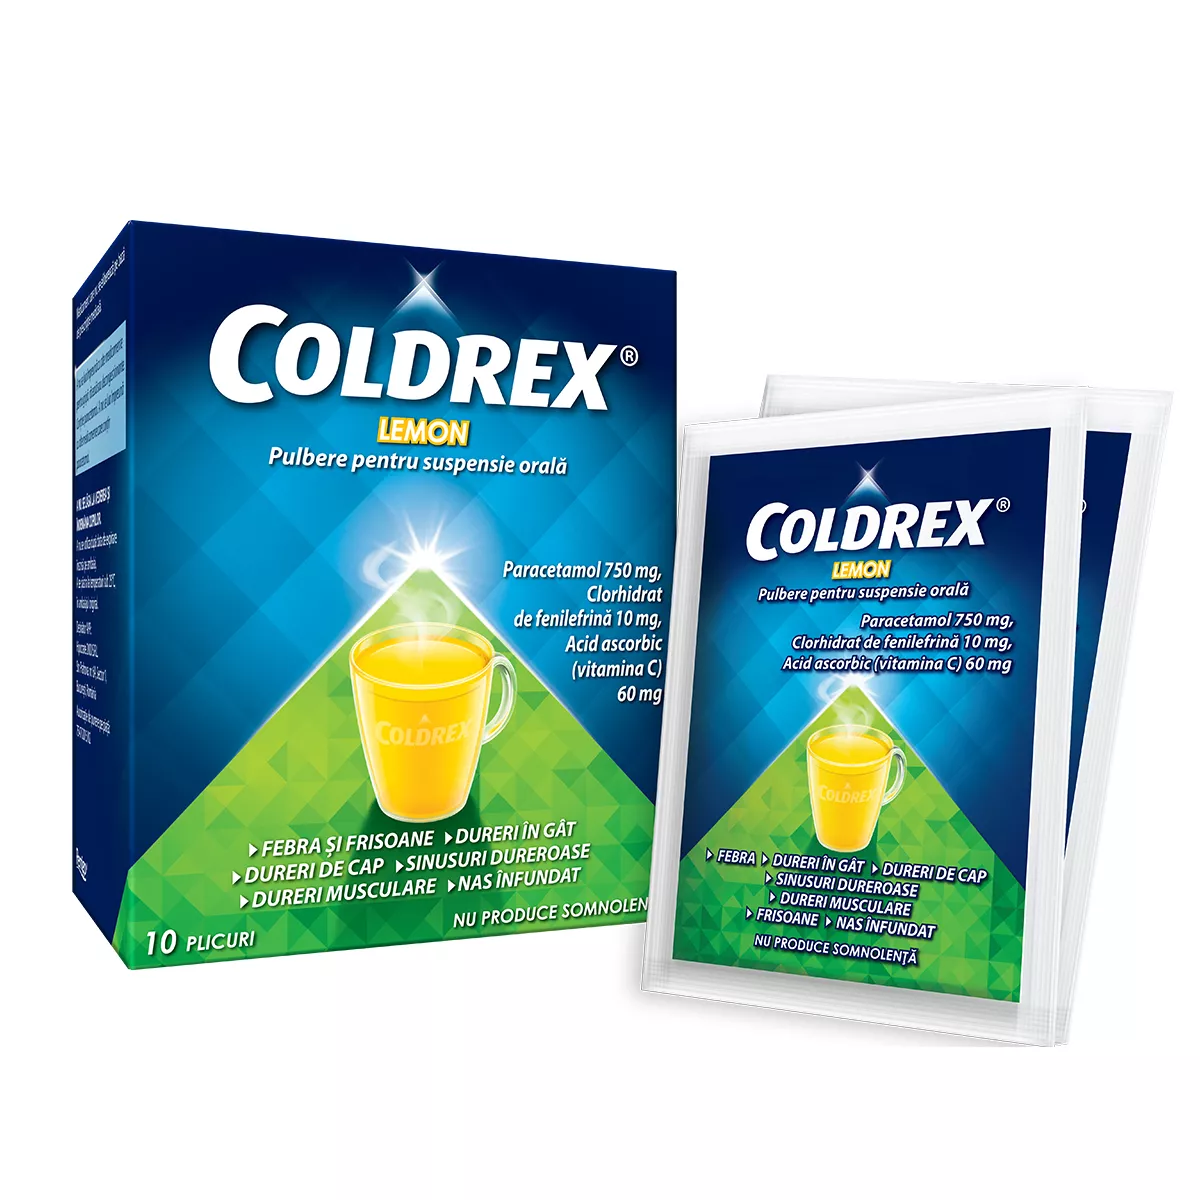 Coldrex Hotrem Lemon x 10pl, [],epastila.ro